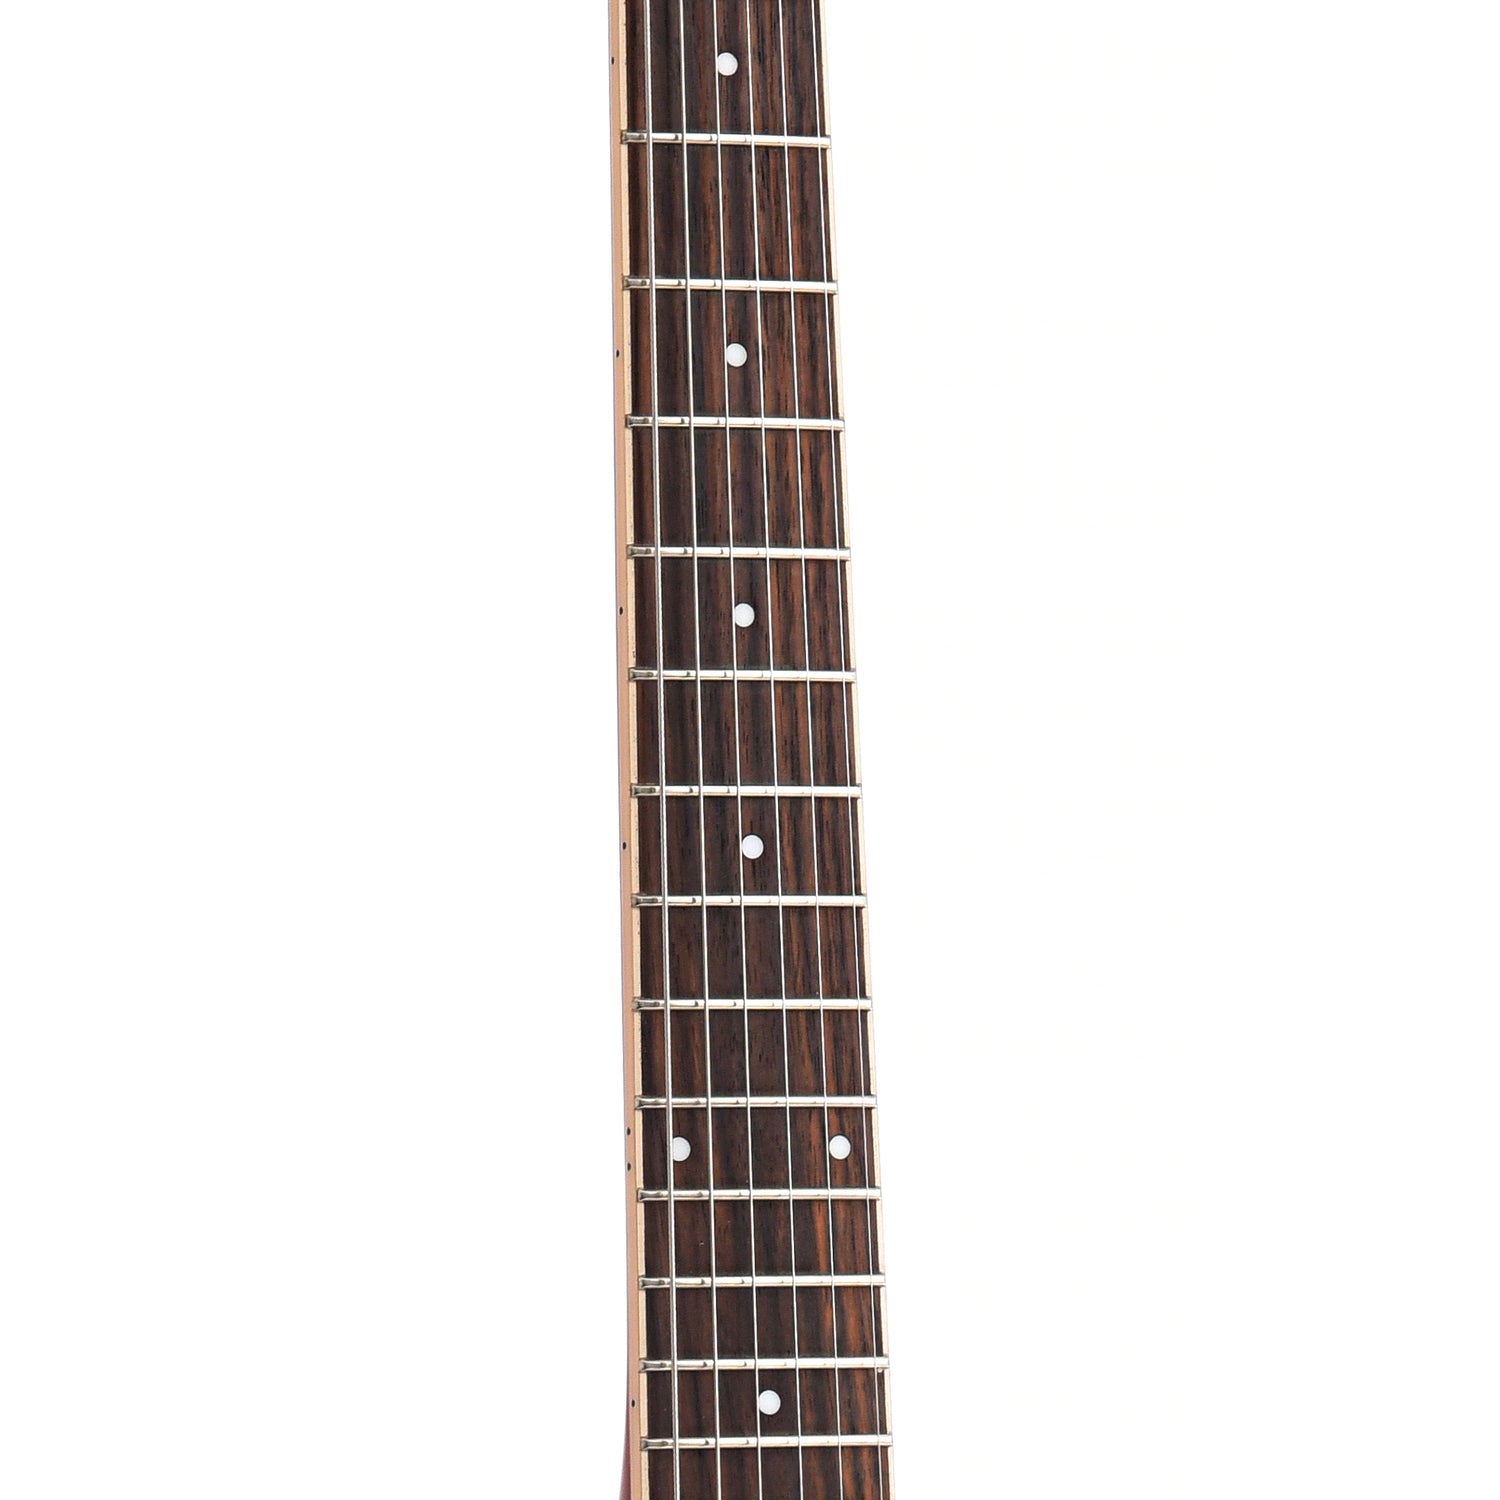 fretboard of Guild Starfire I Double Cutaway Semi-Hollow Body Guitar, Cherry Red